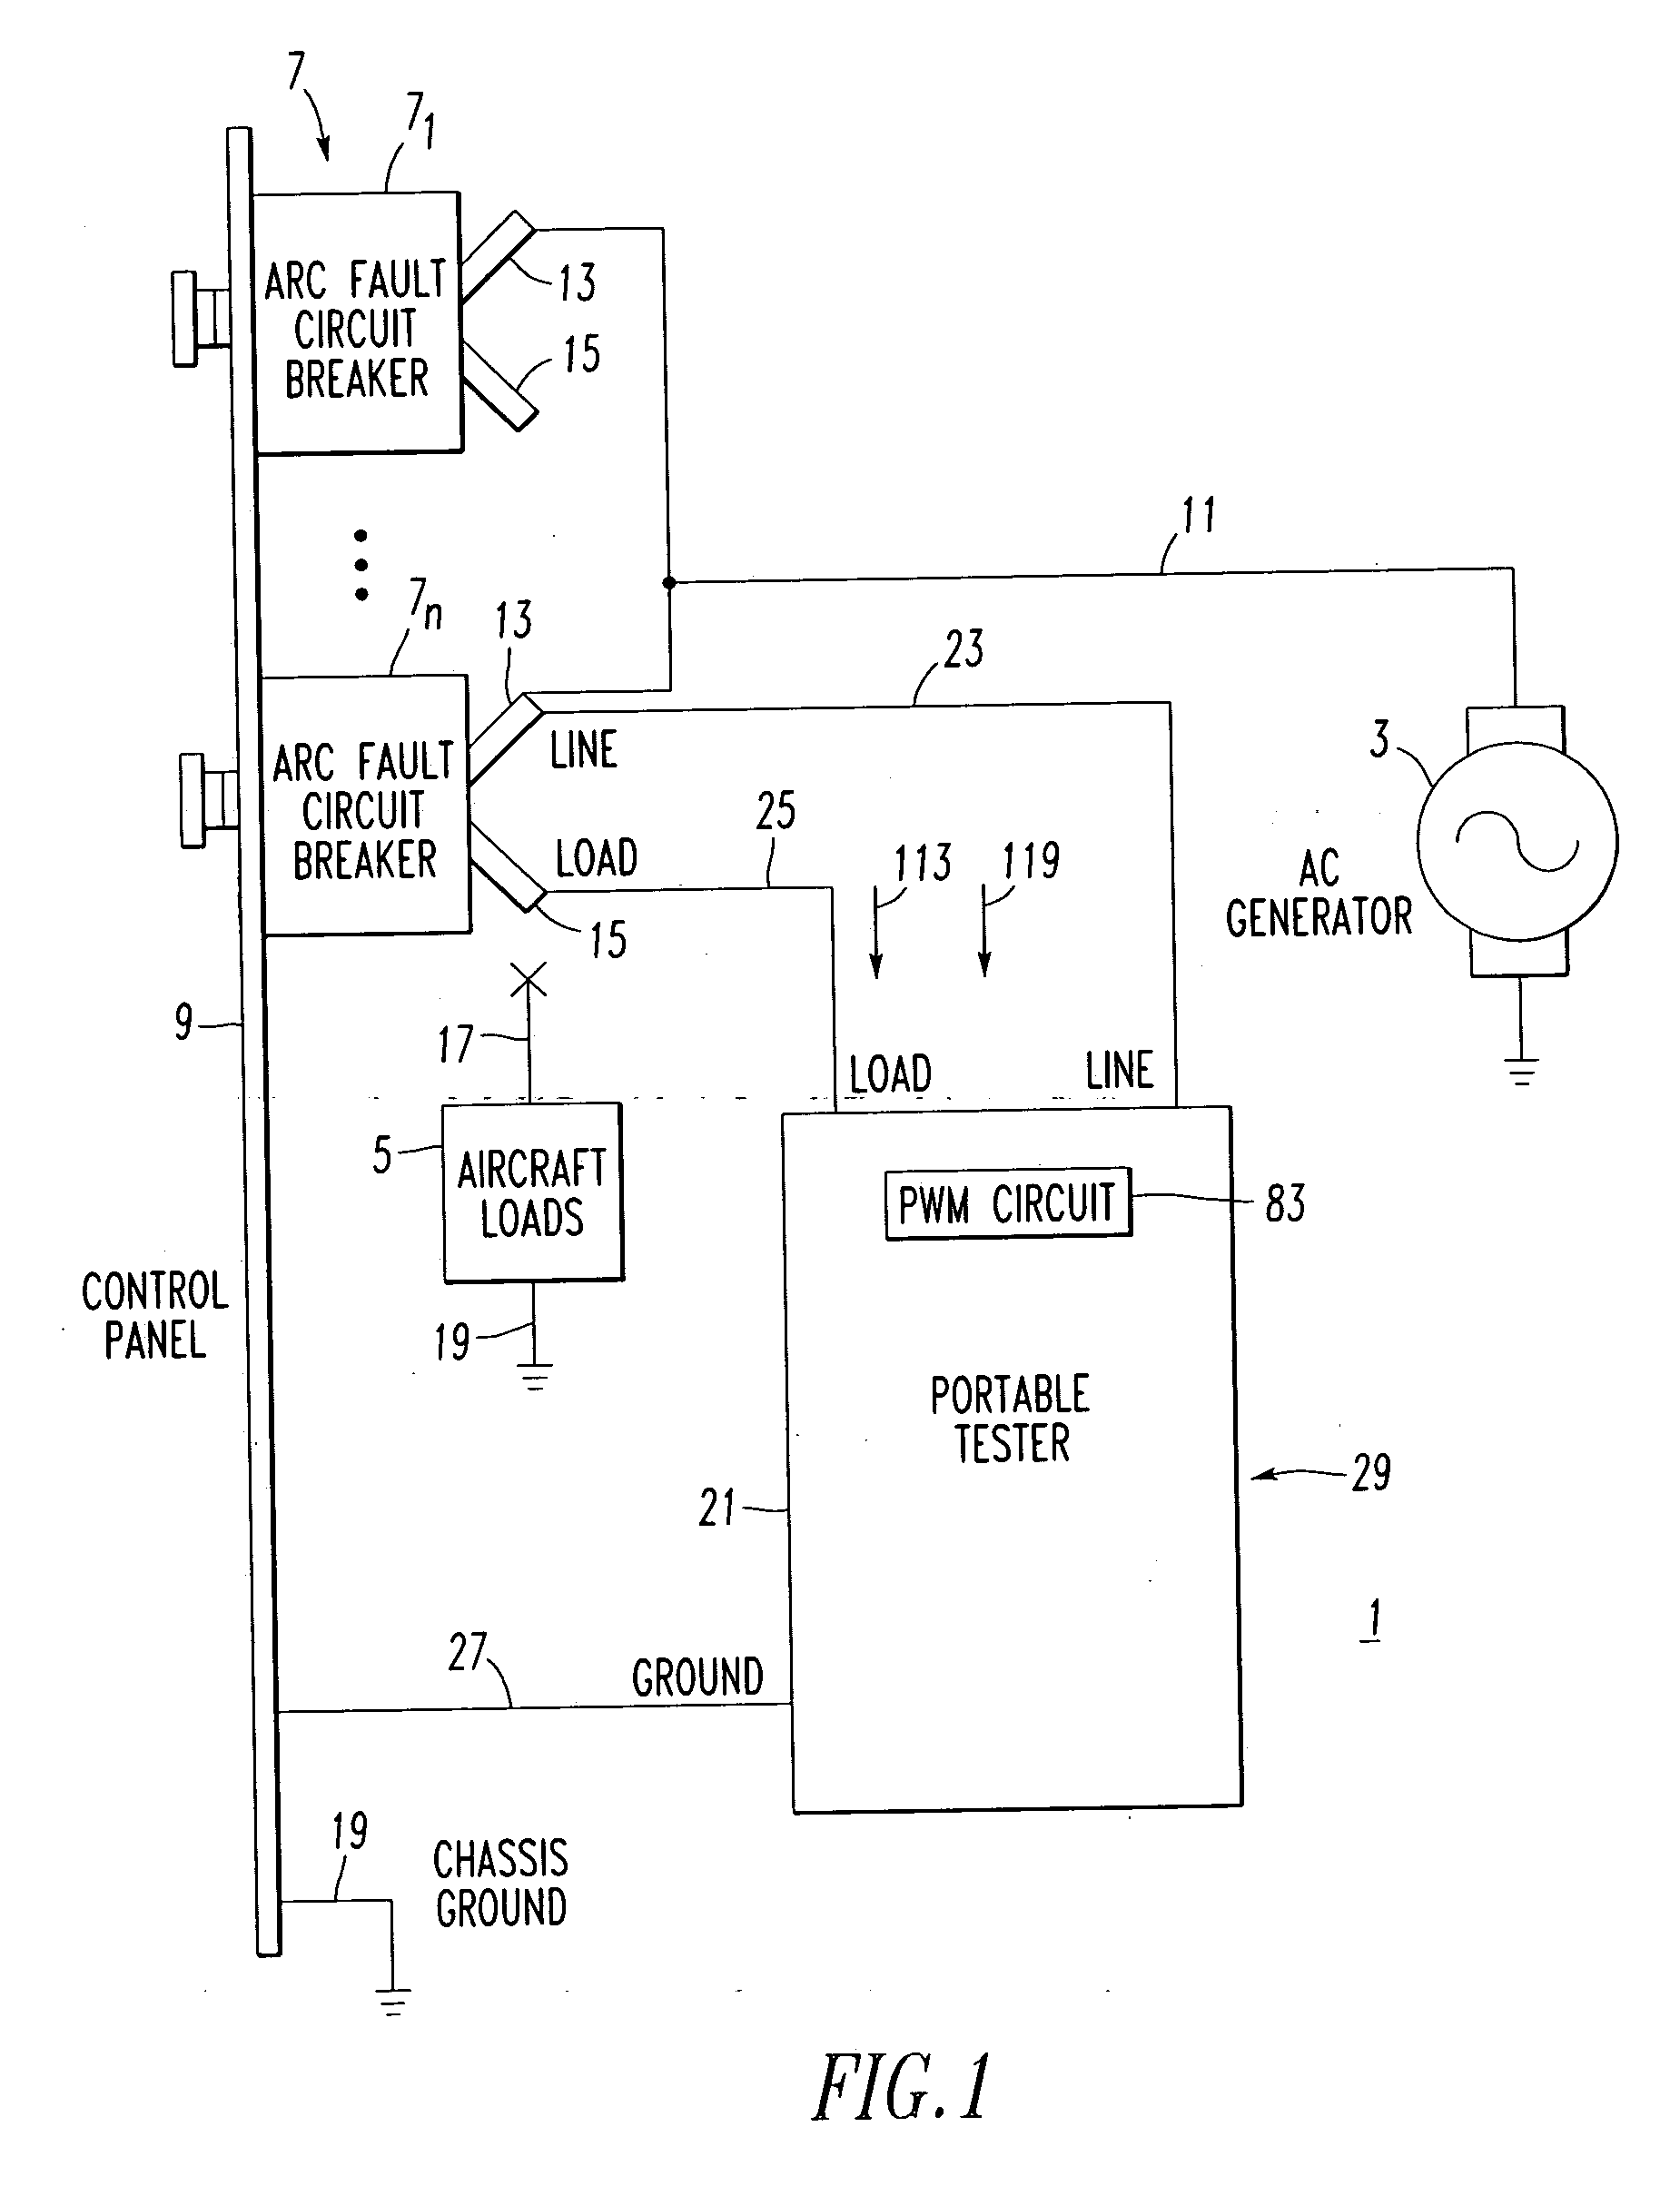 Circuit breaker tester including a pulse width modulation circuit